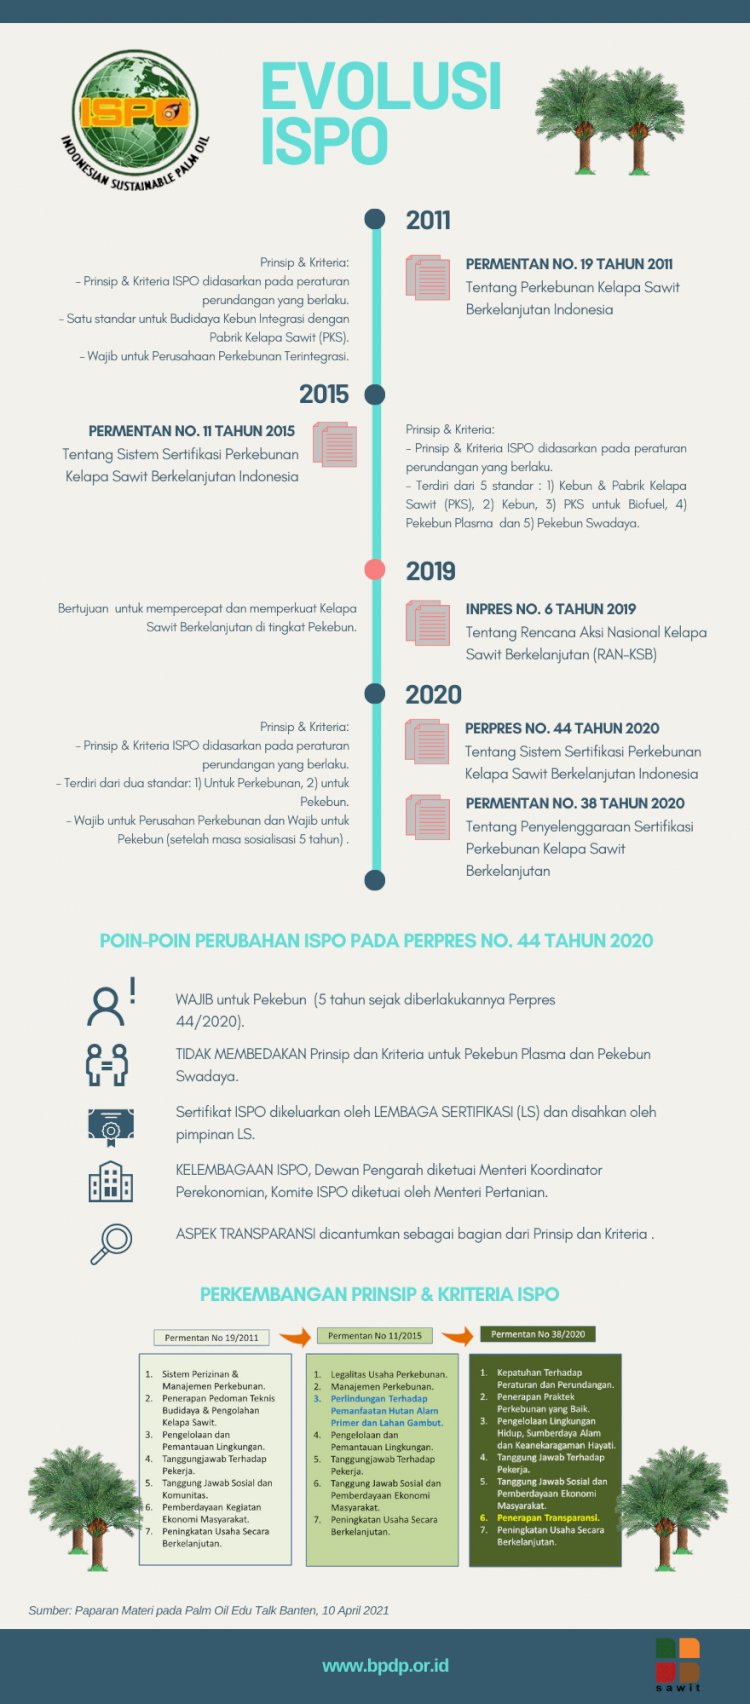 Perkembangan Prinsip dan Kriteria Indonesian Sustainable Palm Oil (ISPO)